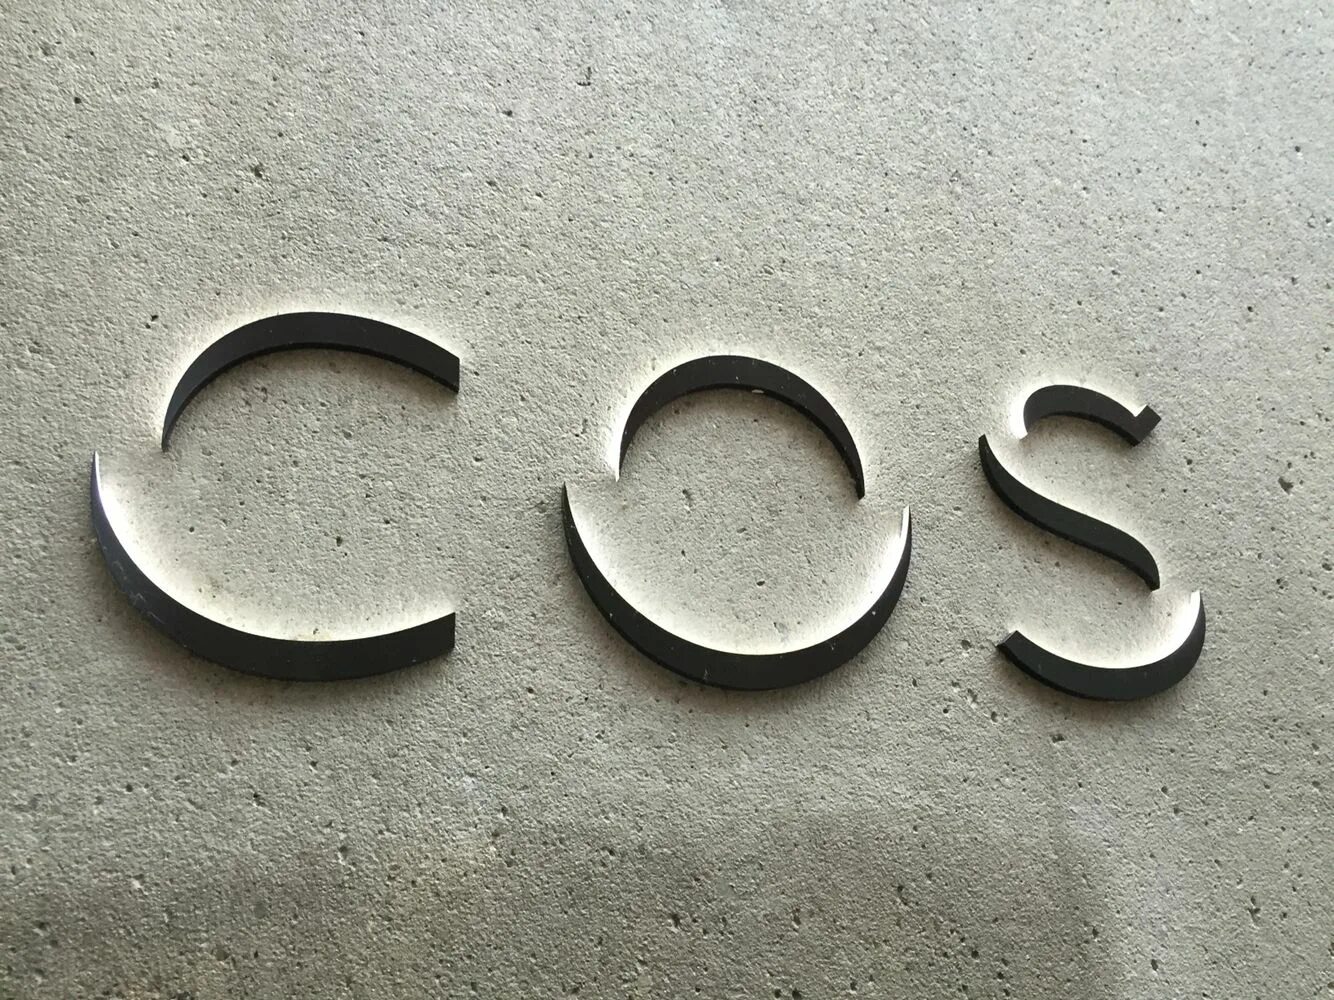 Cos com. Cos бренд. Cos лого. Cos бренд логотип. ЦОЗ логотип.